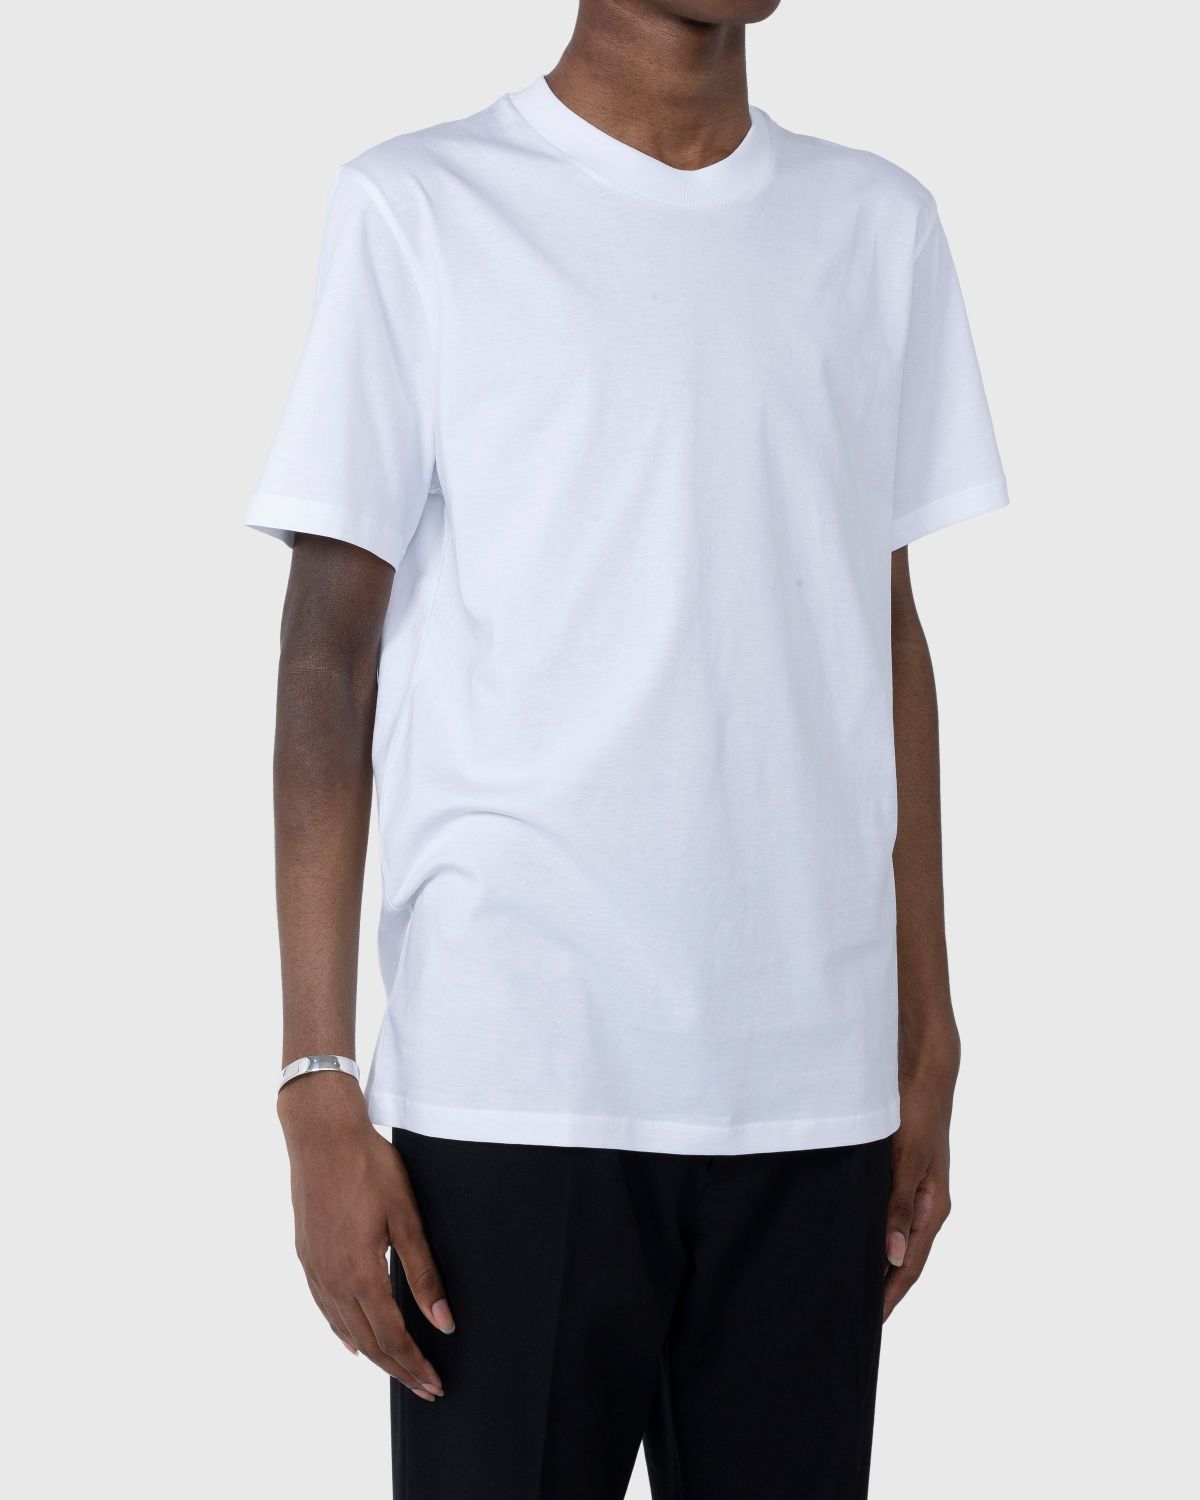 Jil Sander – Solid Cotton T-Shirt White - Tops - White - Image 3